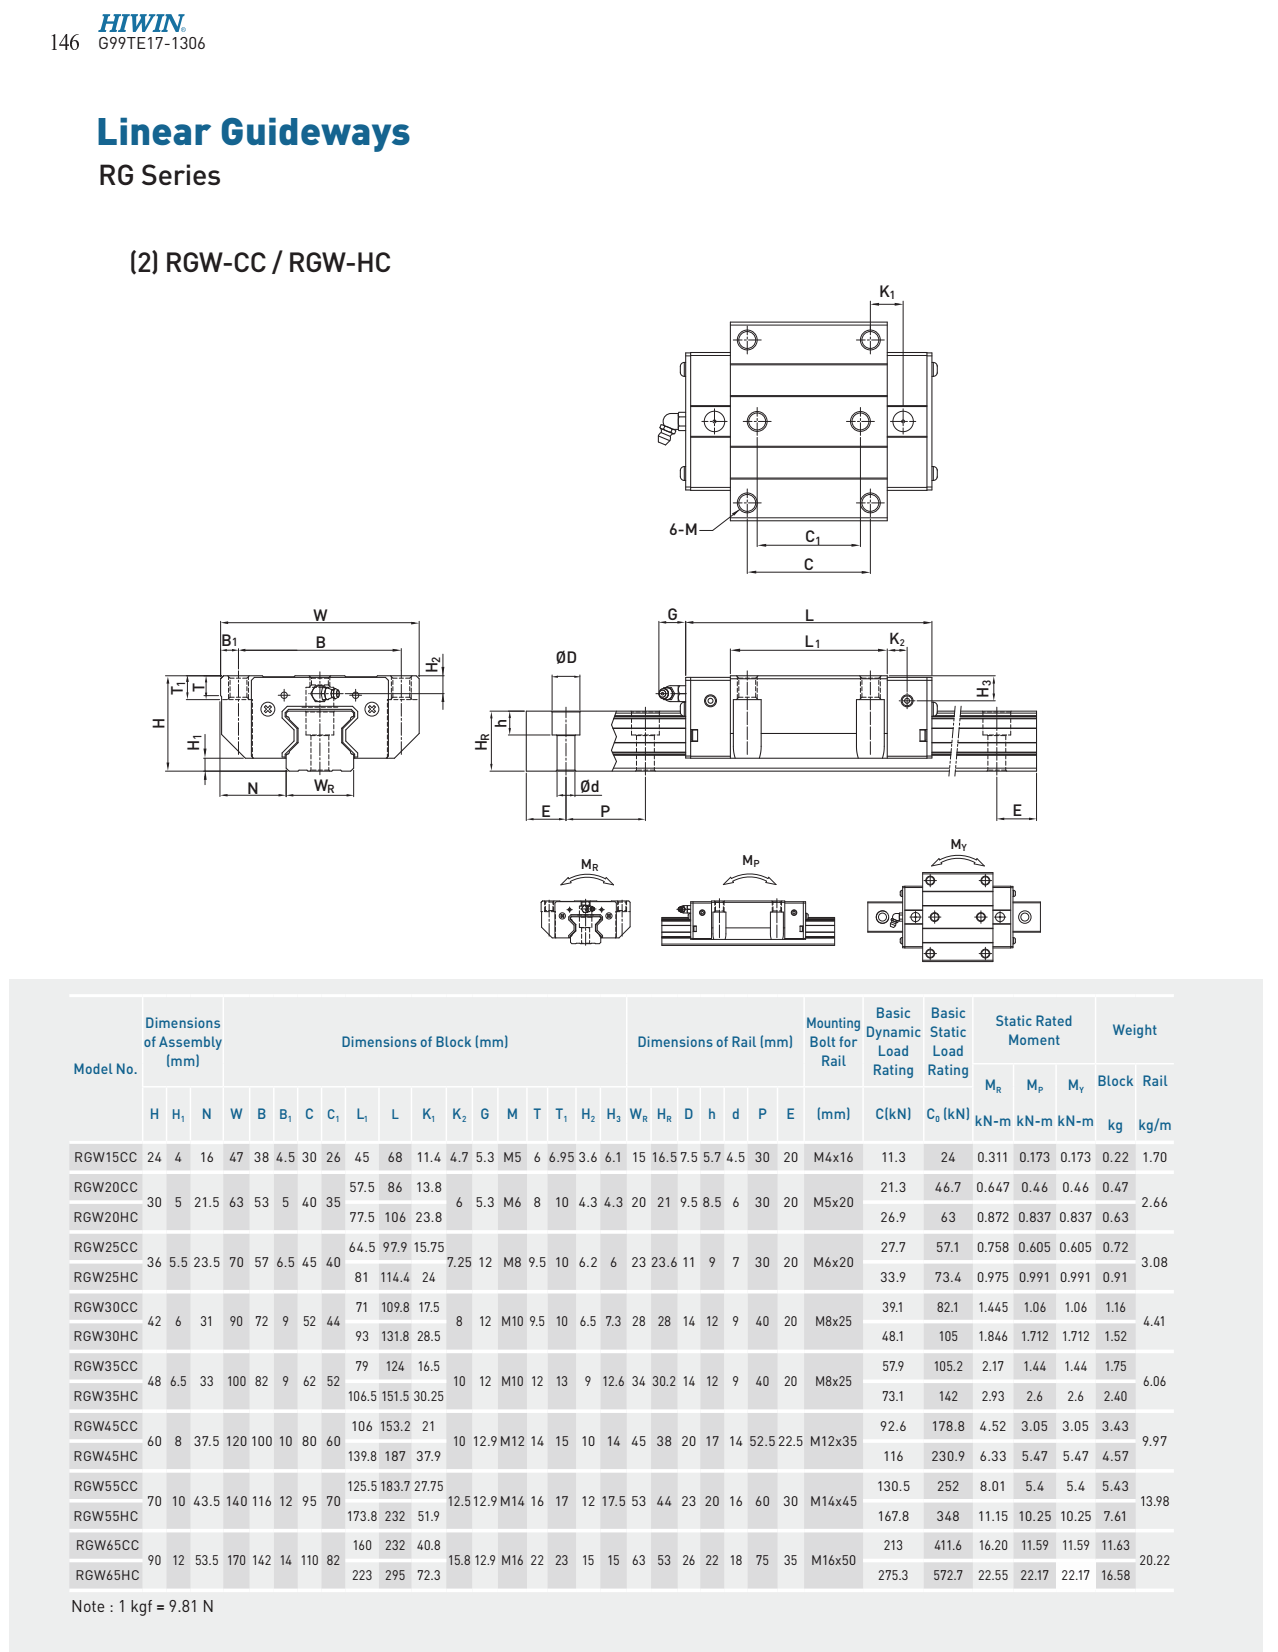 HIWIN Linear Guideway RGW-CC RGW-HC catalog